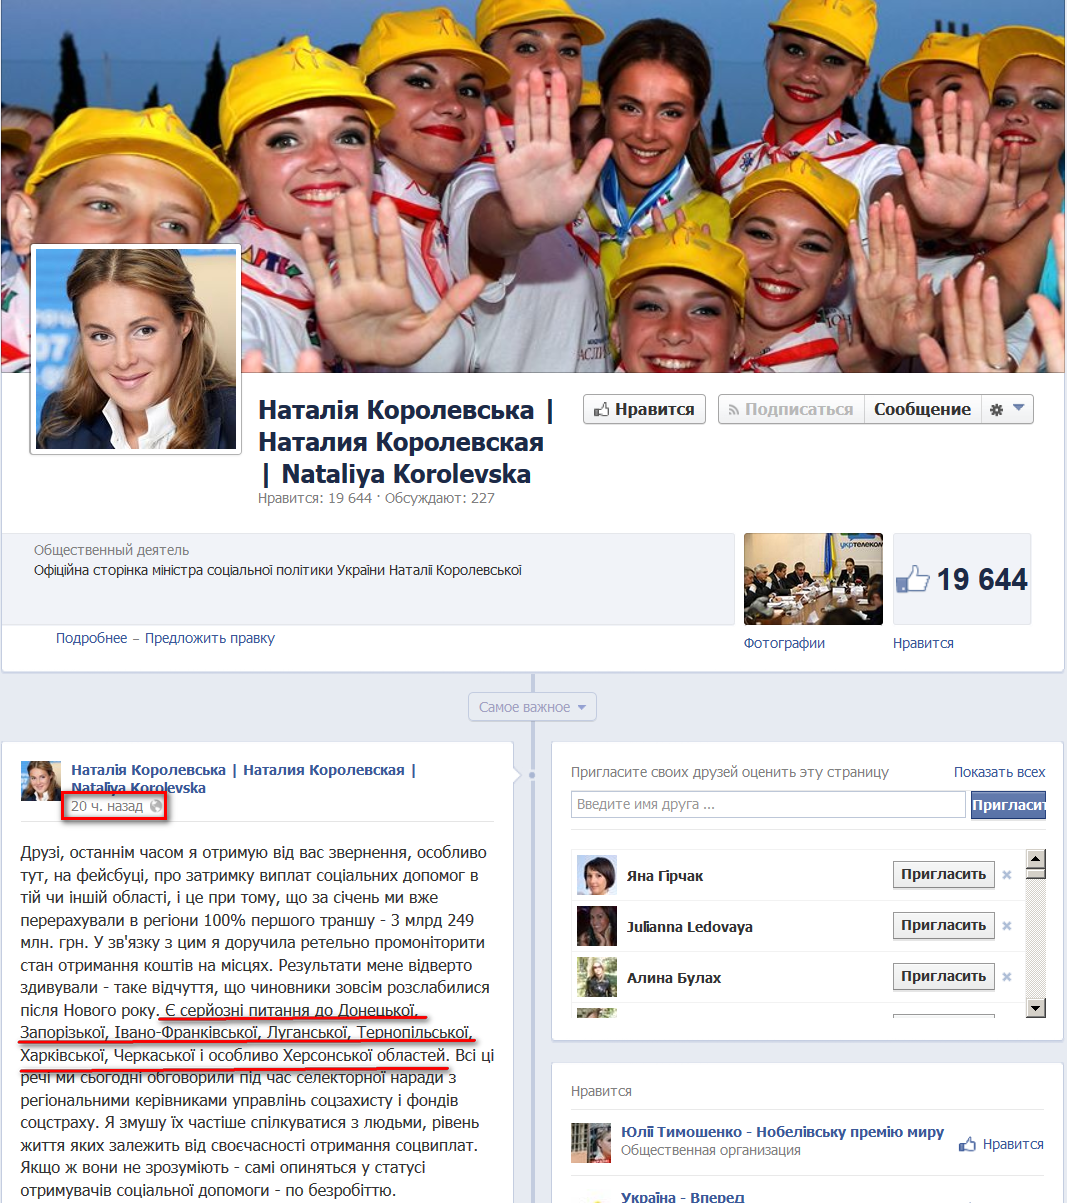 https://www.facebook.com/Nataliya.Korolevska?fref=ts